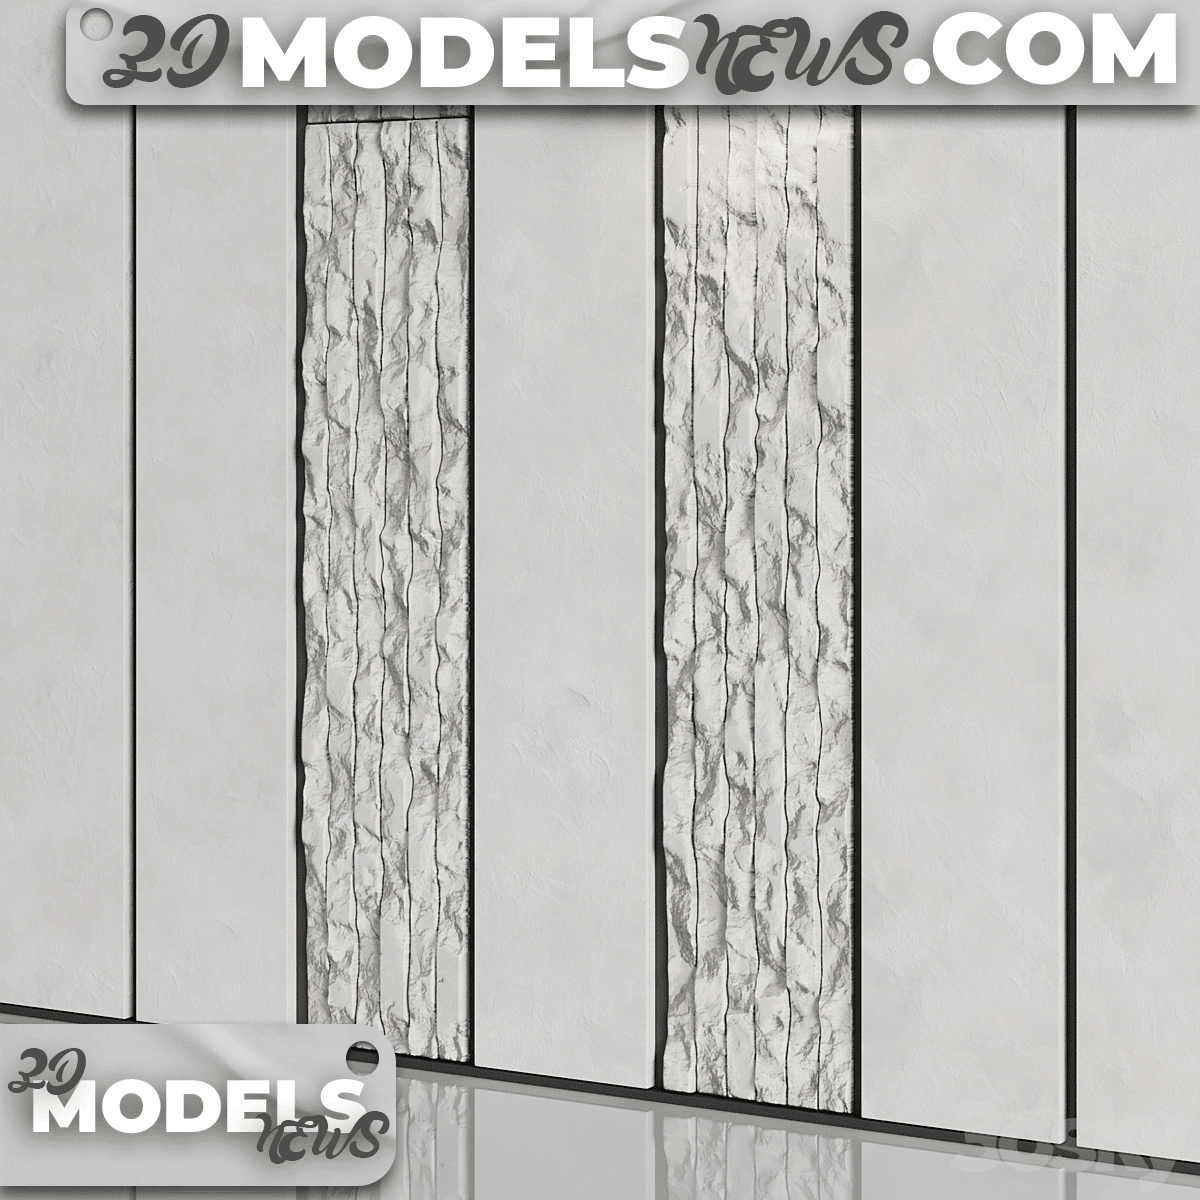 Decorative wall panels model 5 4